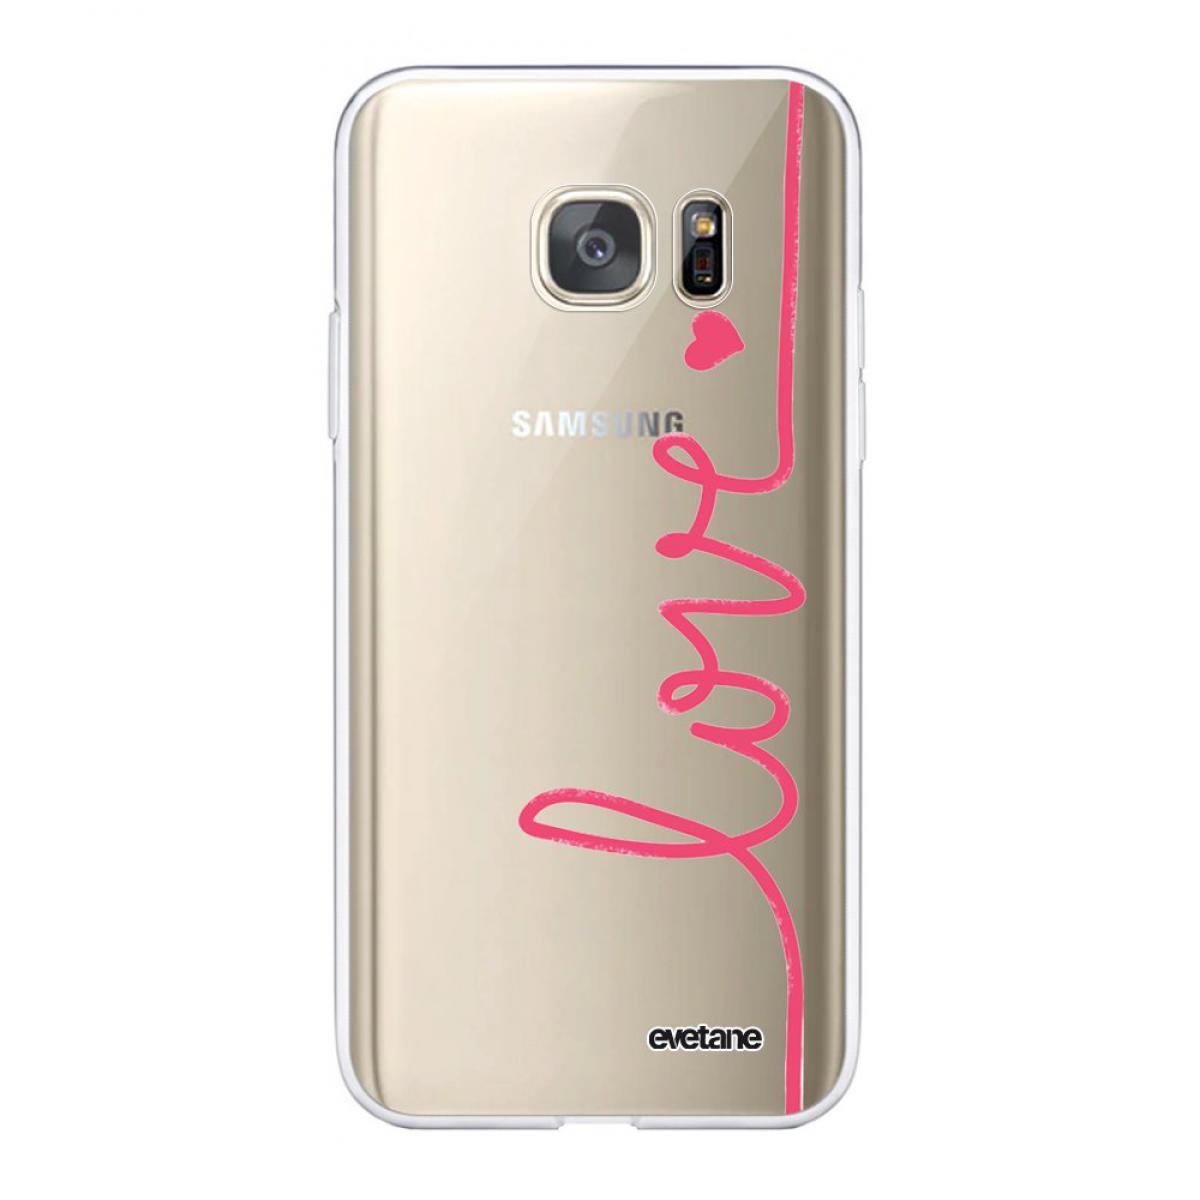 Evetane - Coque Samsung Galaxy S7 360 intégrale transparente Love Tendance Evetane - Coque, étui smartphone